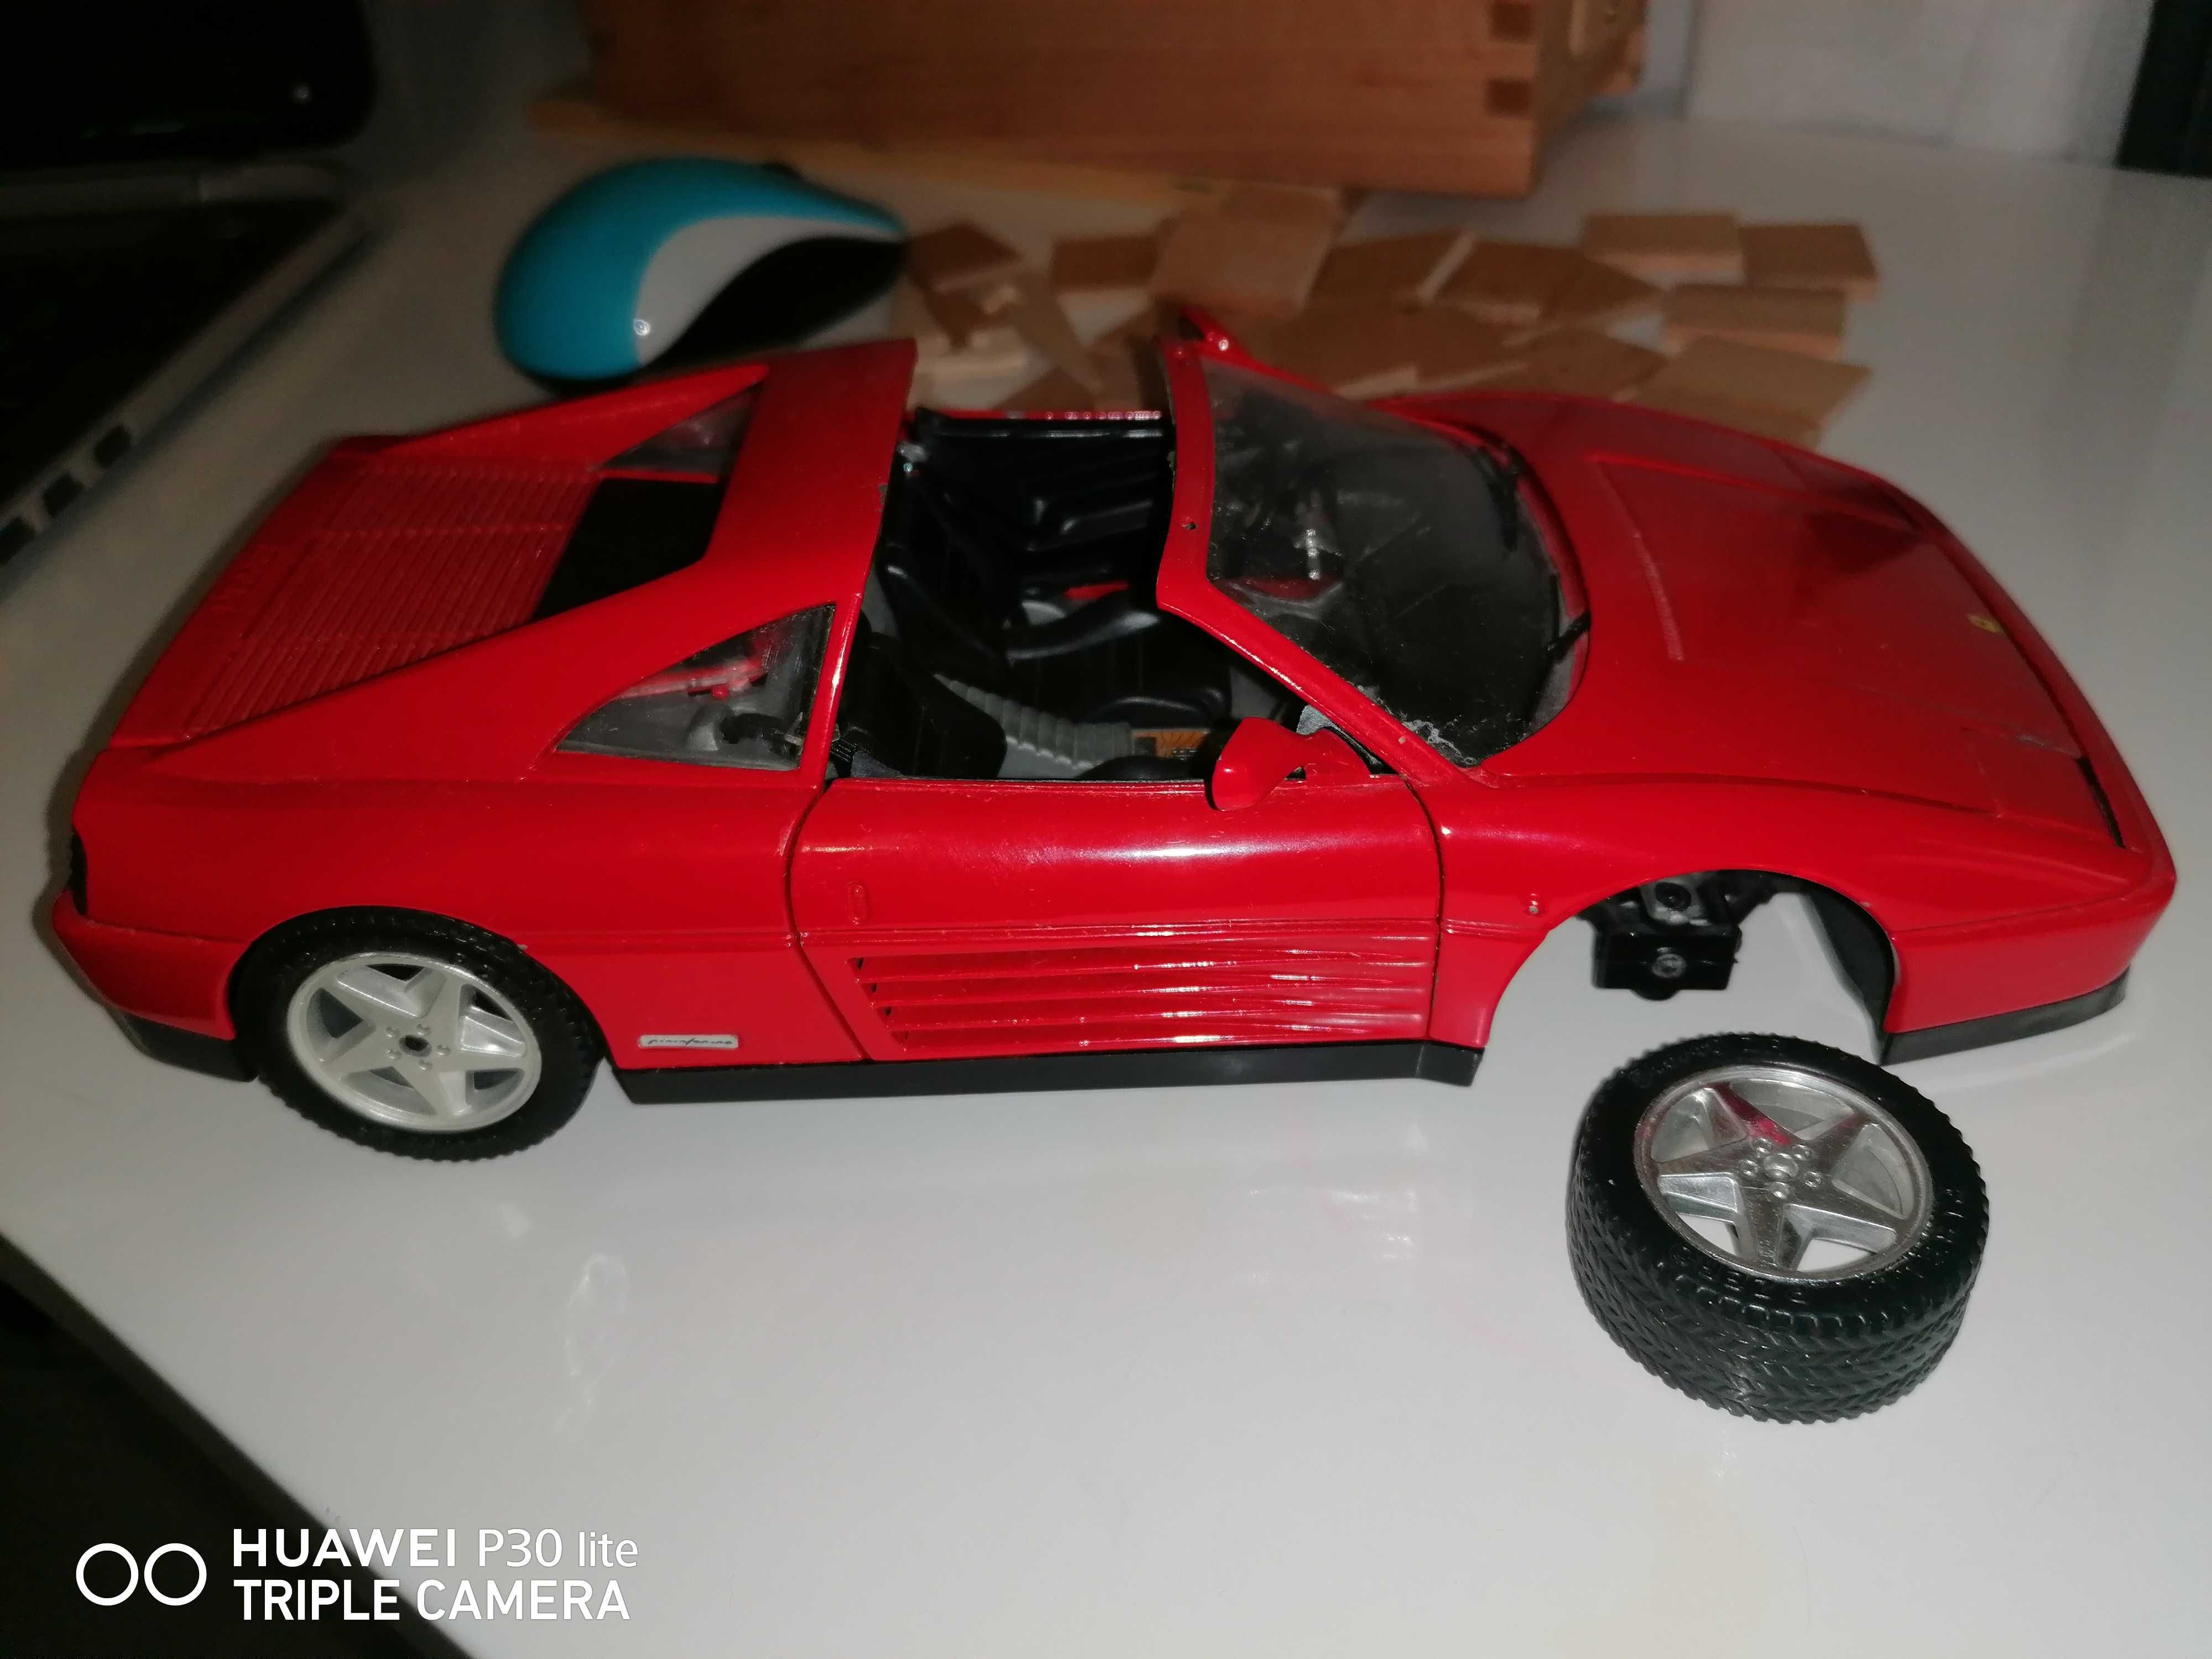 Vând jucărie macheta Ferrari 1 18 mira